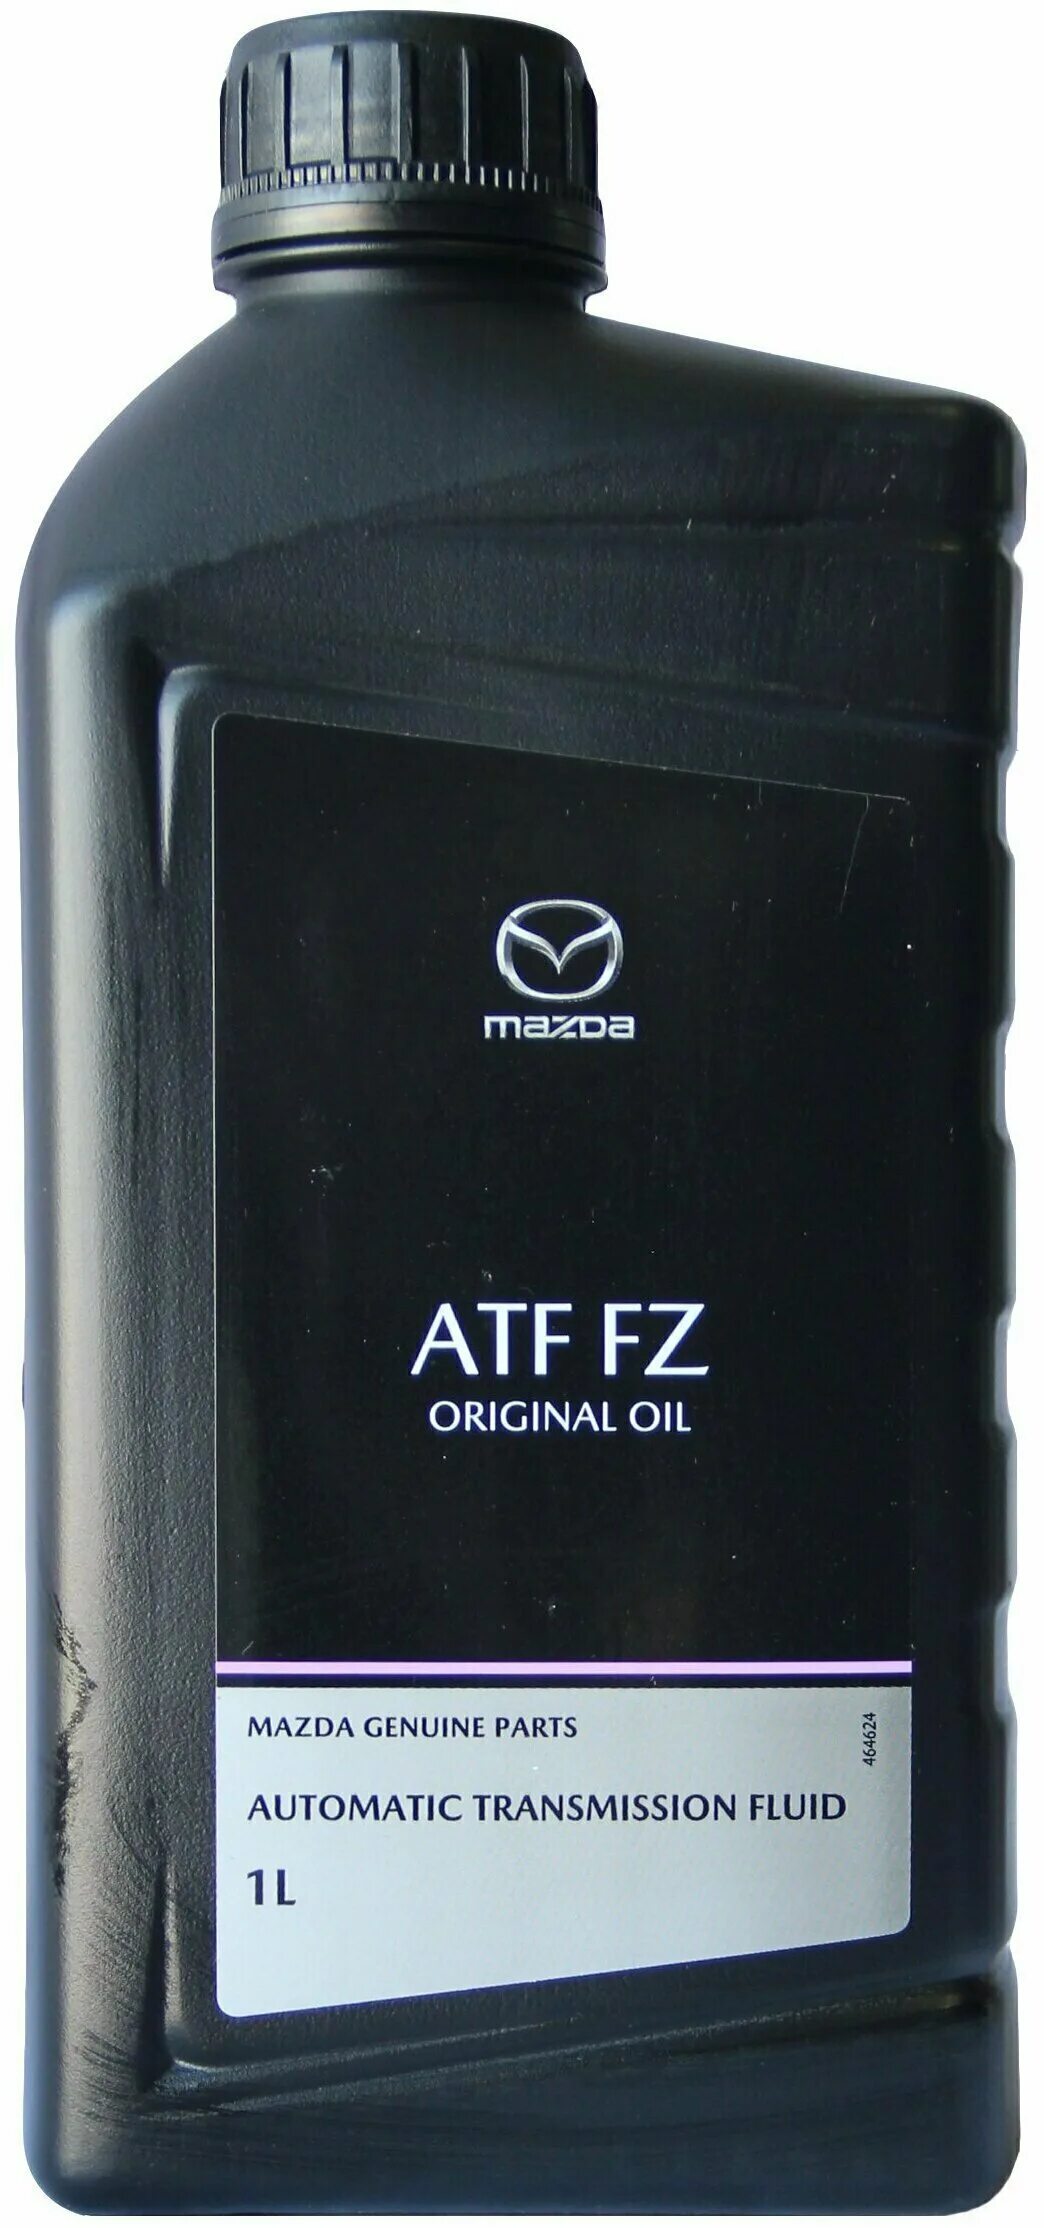 Mazda Original Oil ATF FZ. Mazda Original Oil ATF FZ 1л. ATF FZ Mazda цвет масла. Mazda 8300771773.